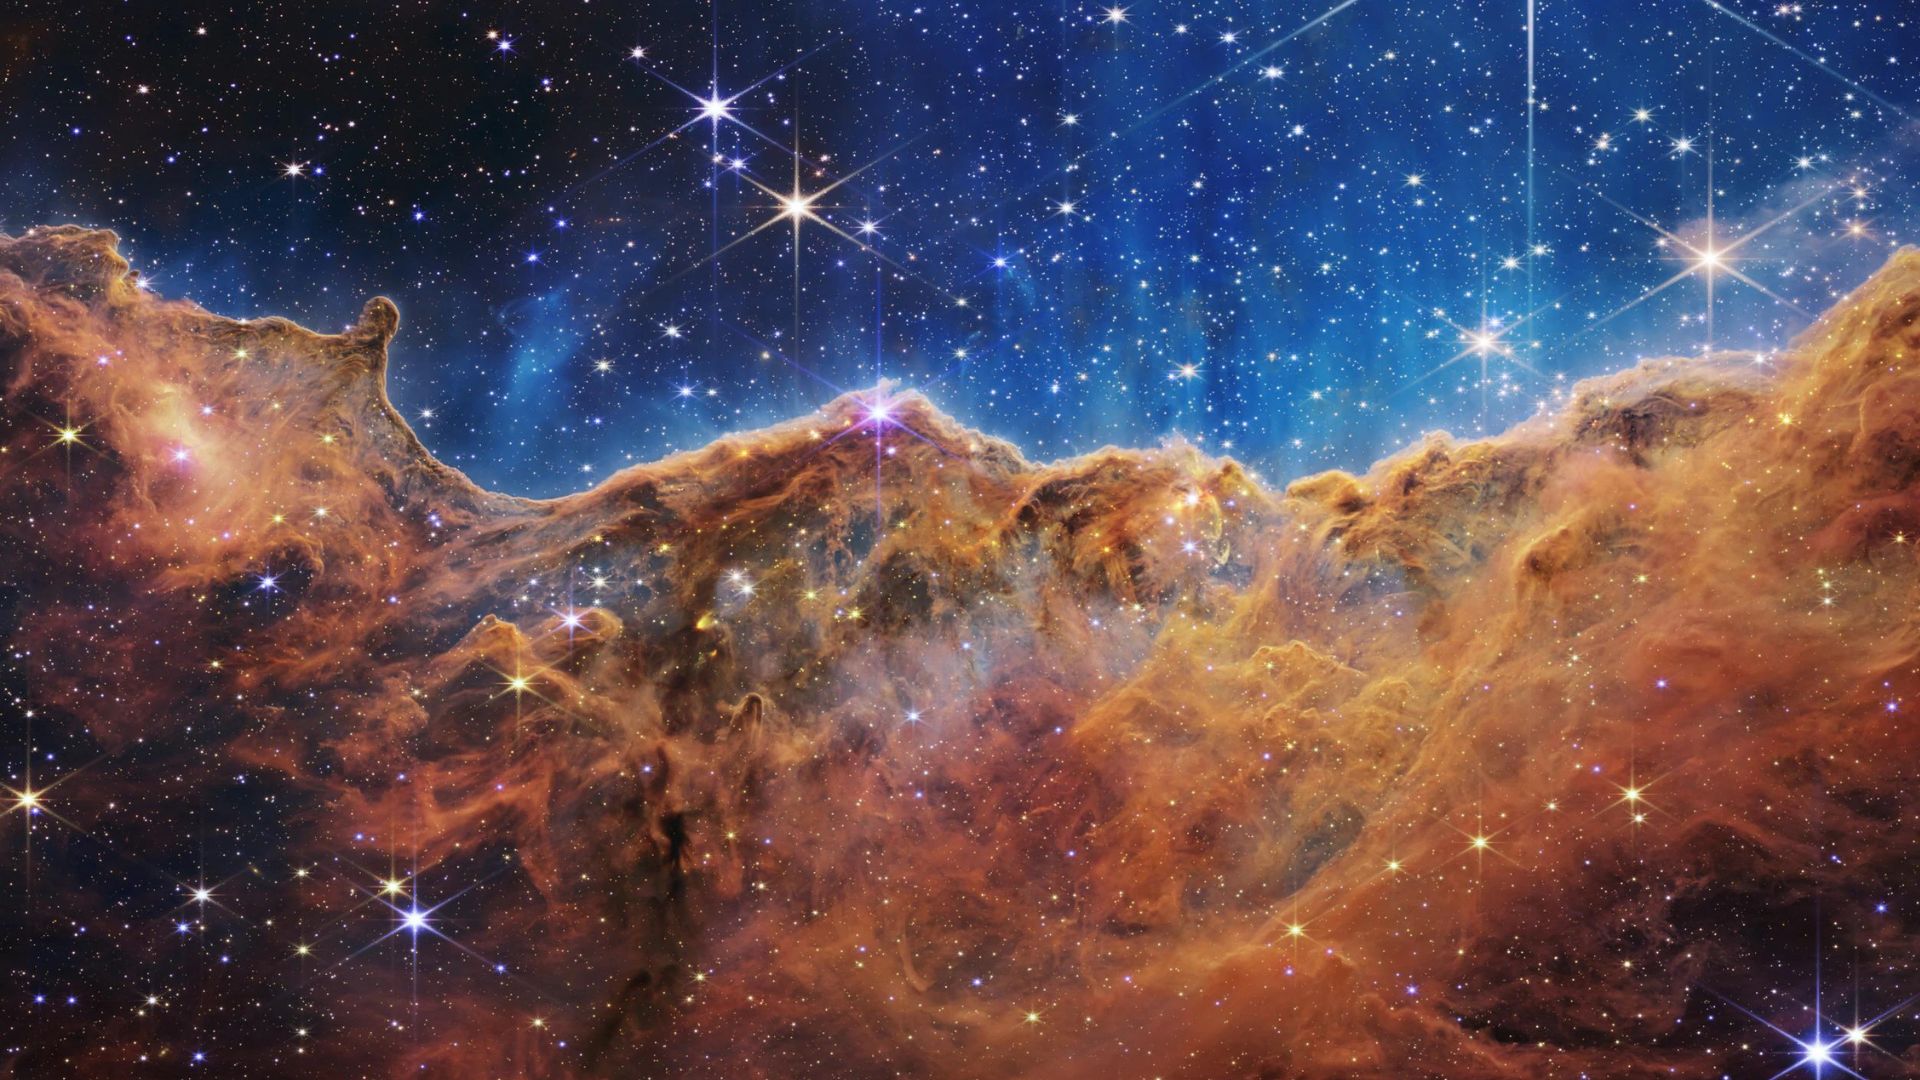 Webb Telescope Shows Dazzling Cosmic Images